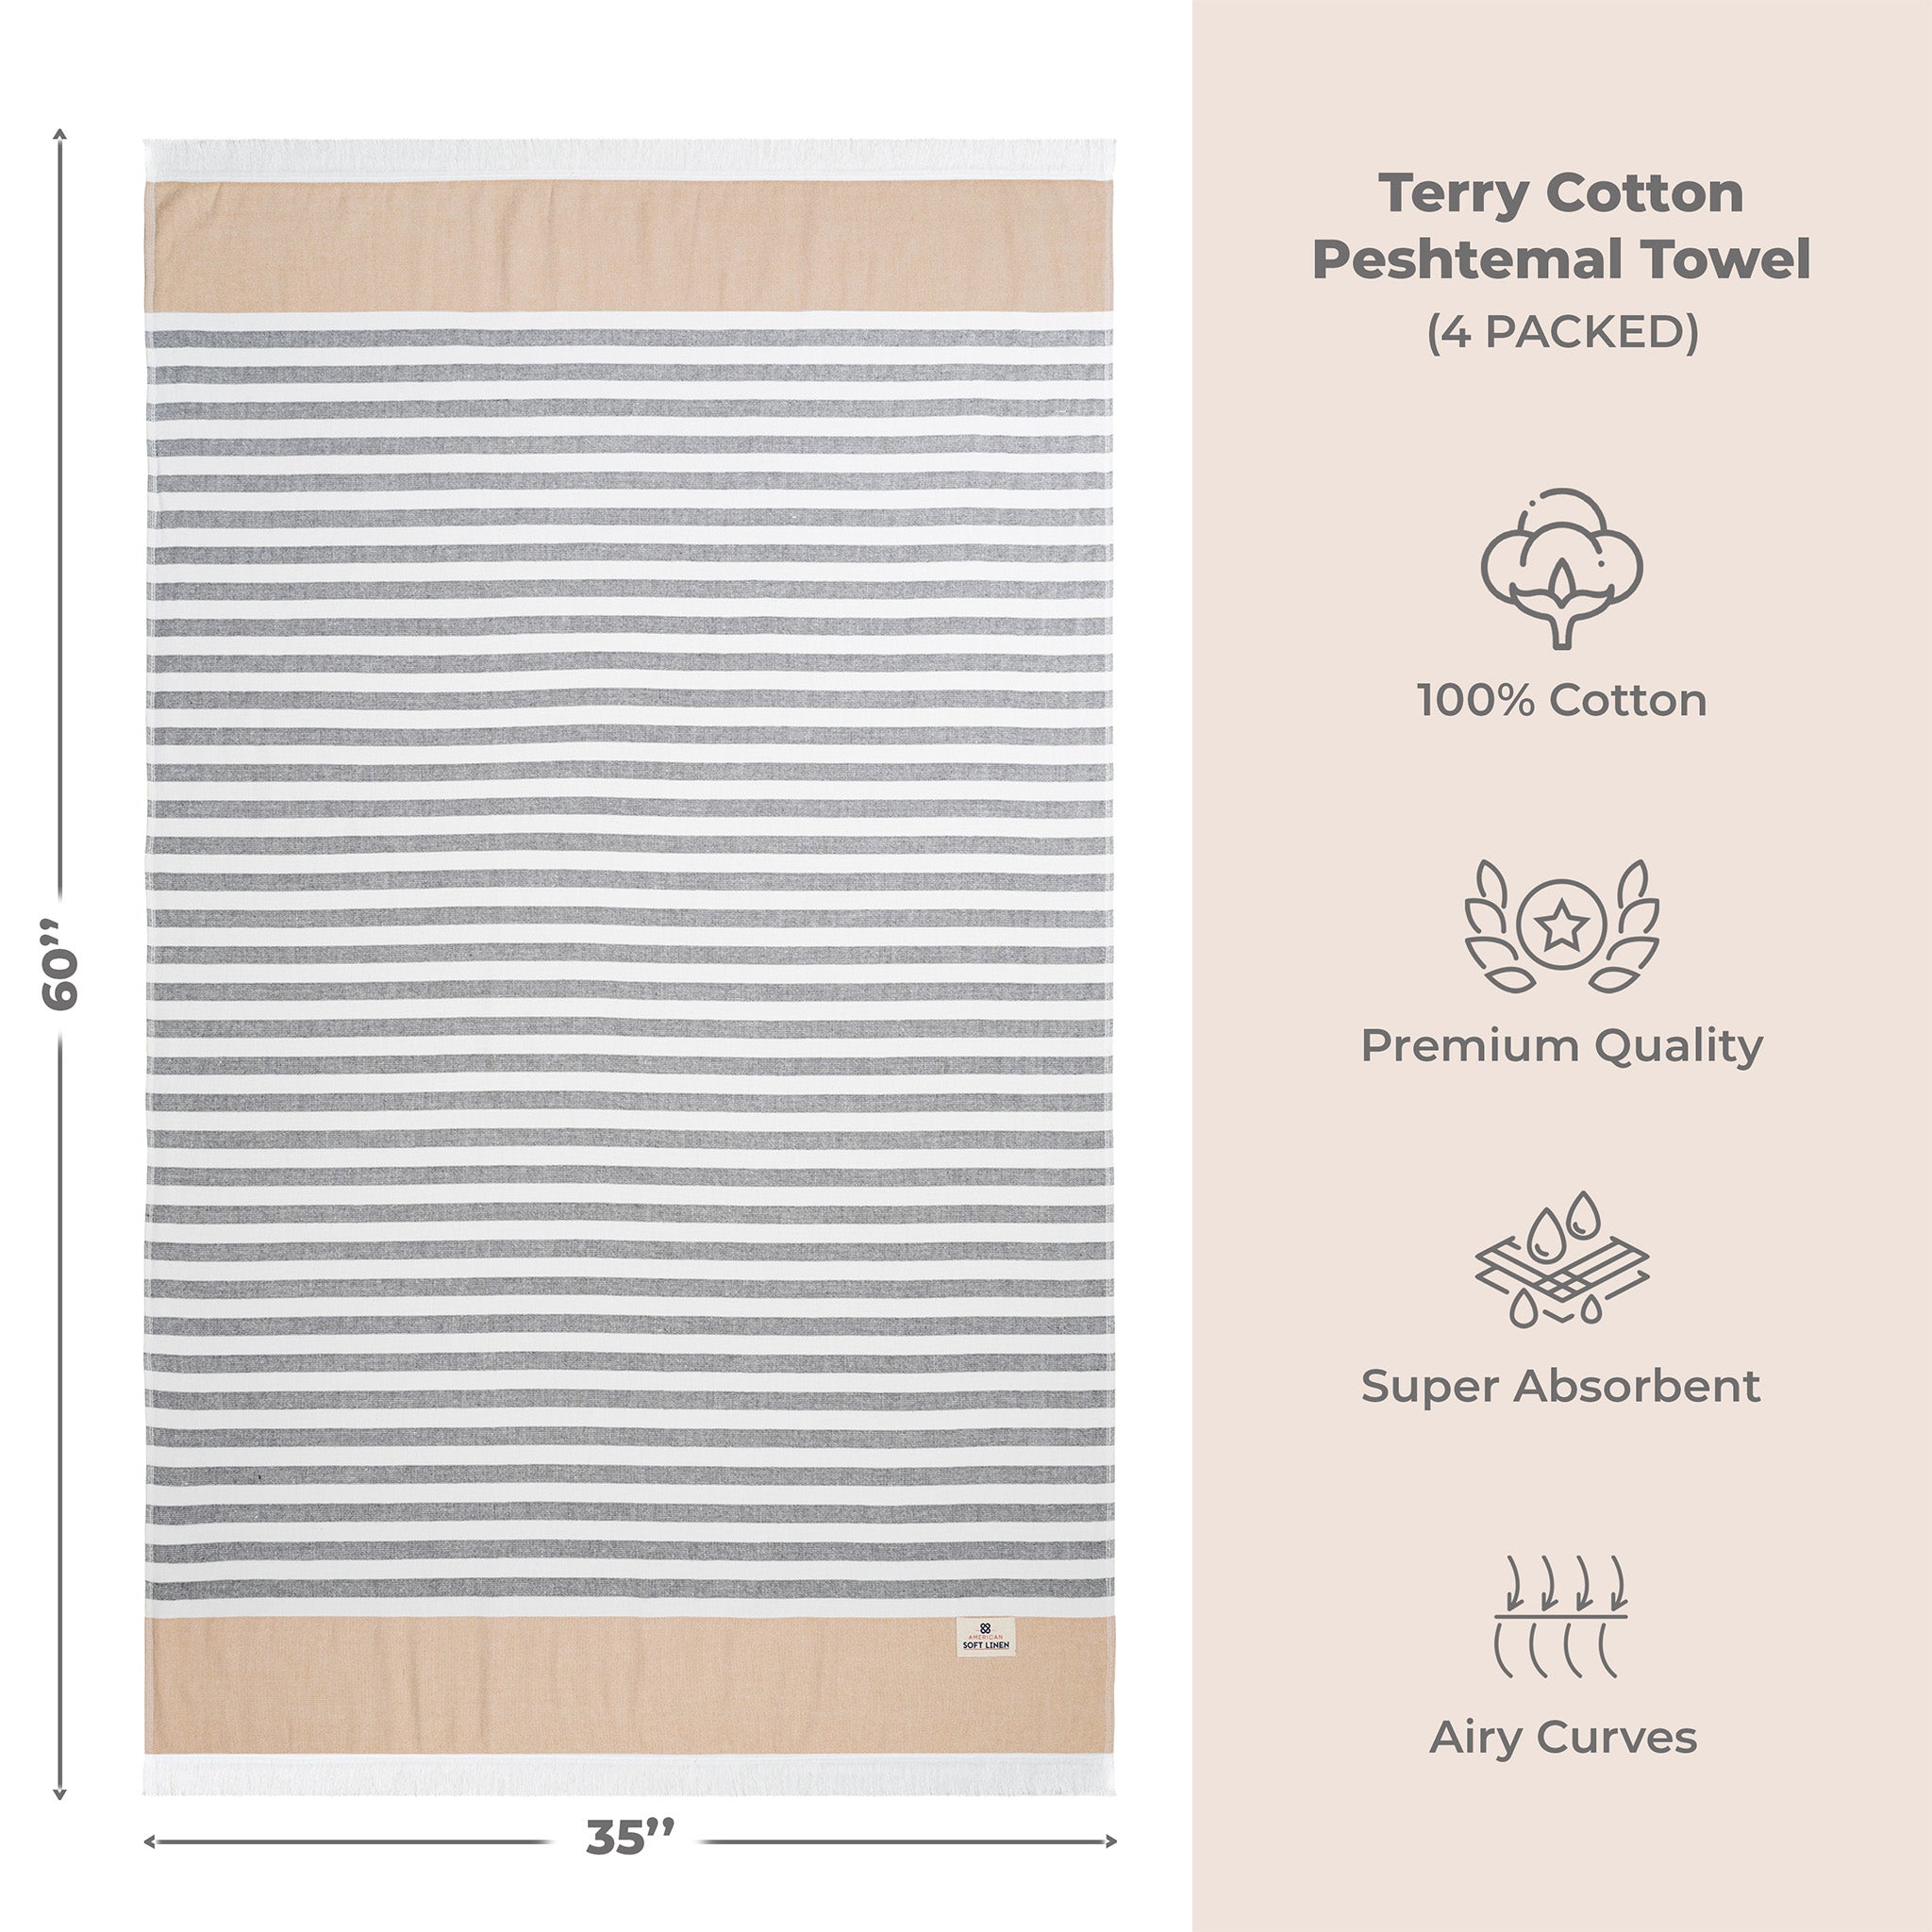 4 Packed 100% Cotton Terry Peshtemal & Beach Towel Brown-03